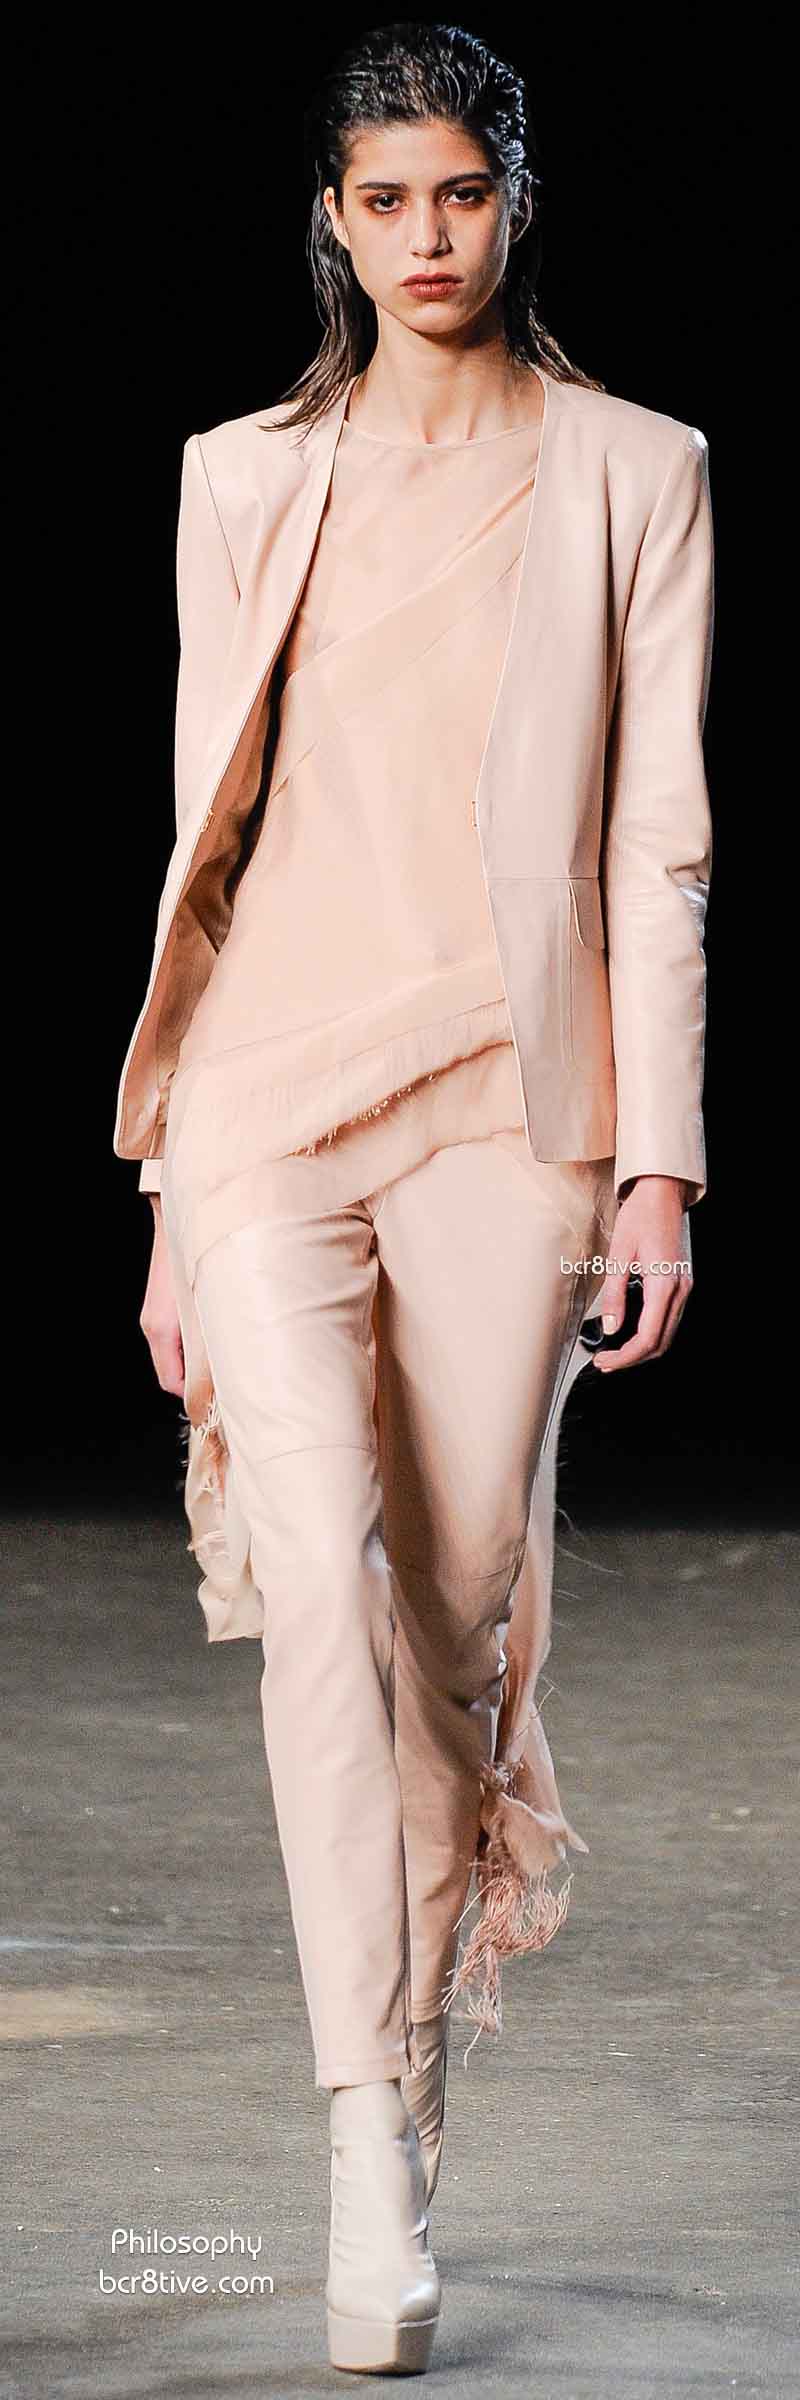 Fall 2014 Menswear Inspired Fashion - Philosophy